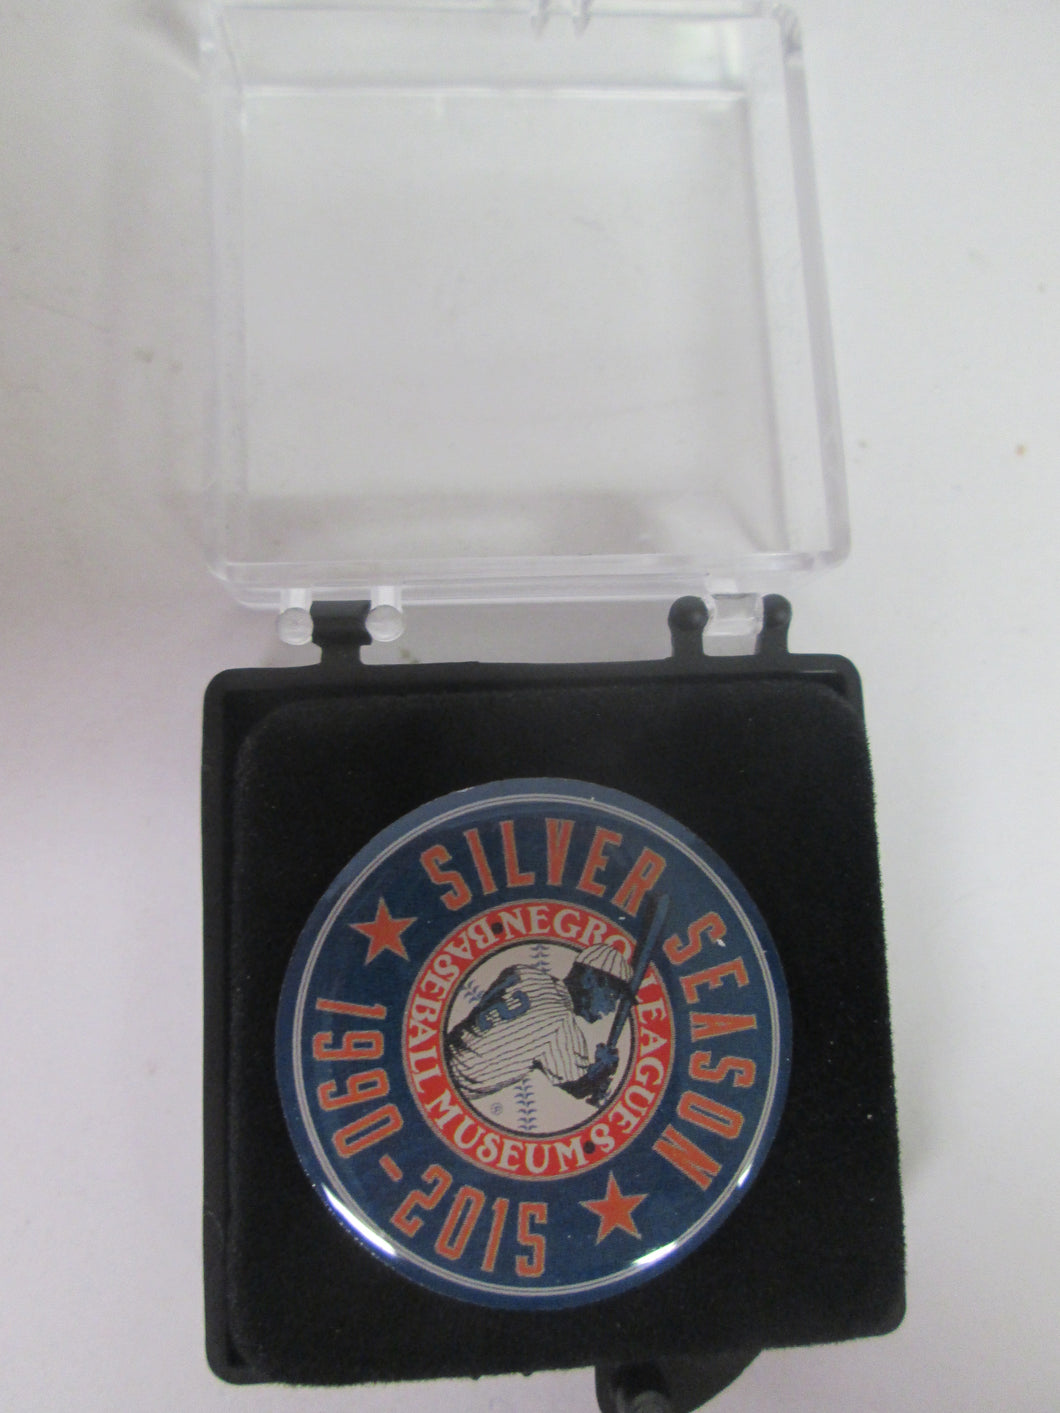 Negro League Baseball Museum Silver Season 1990-2015 Pin